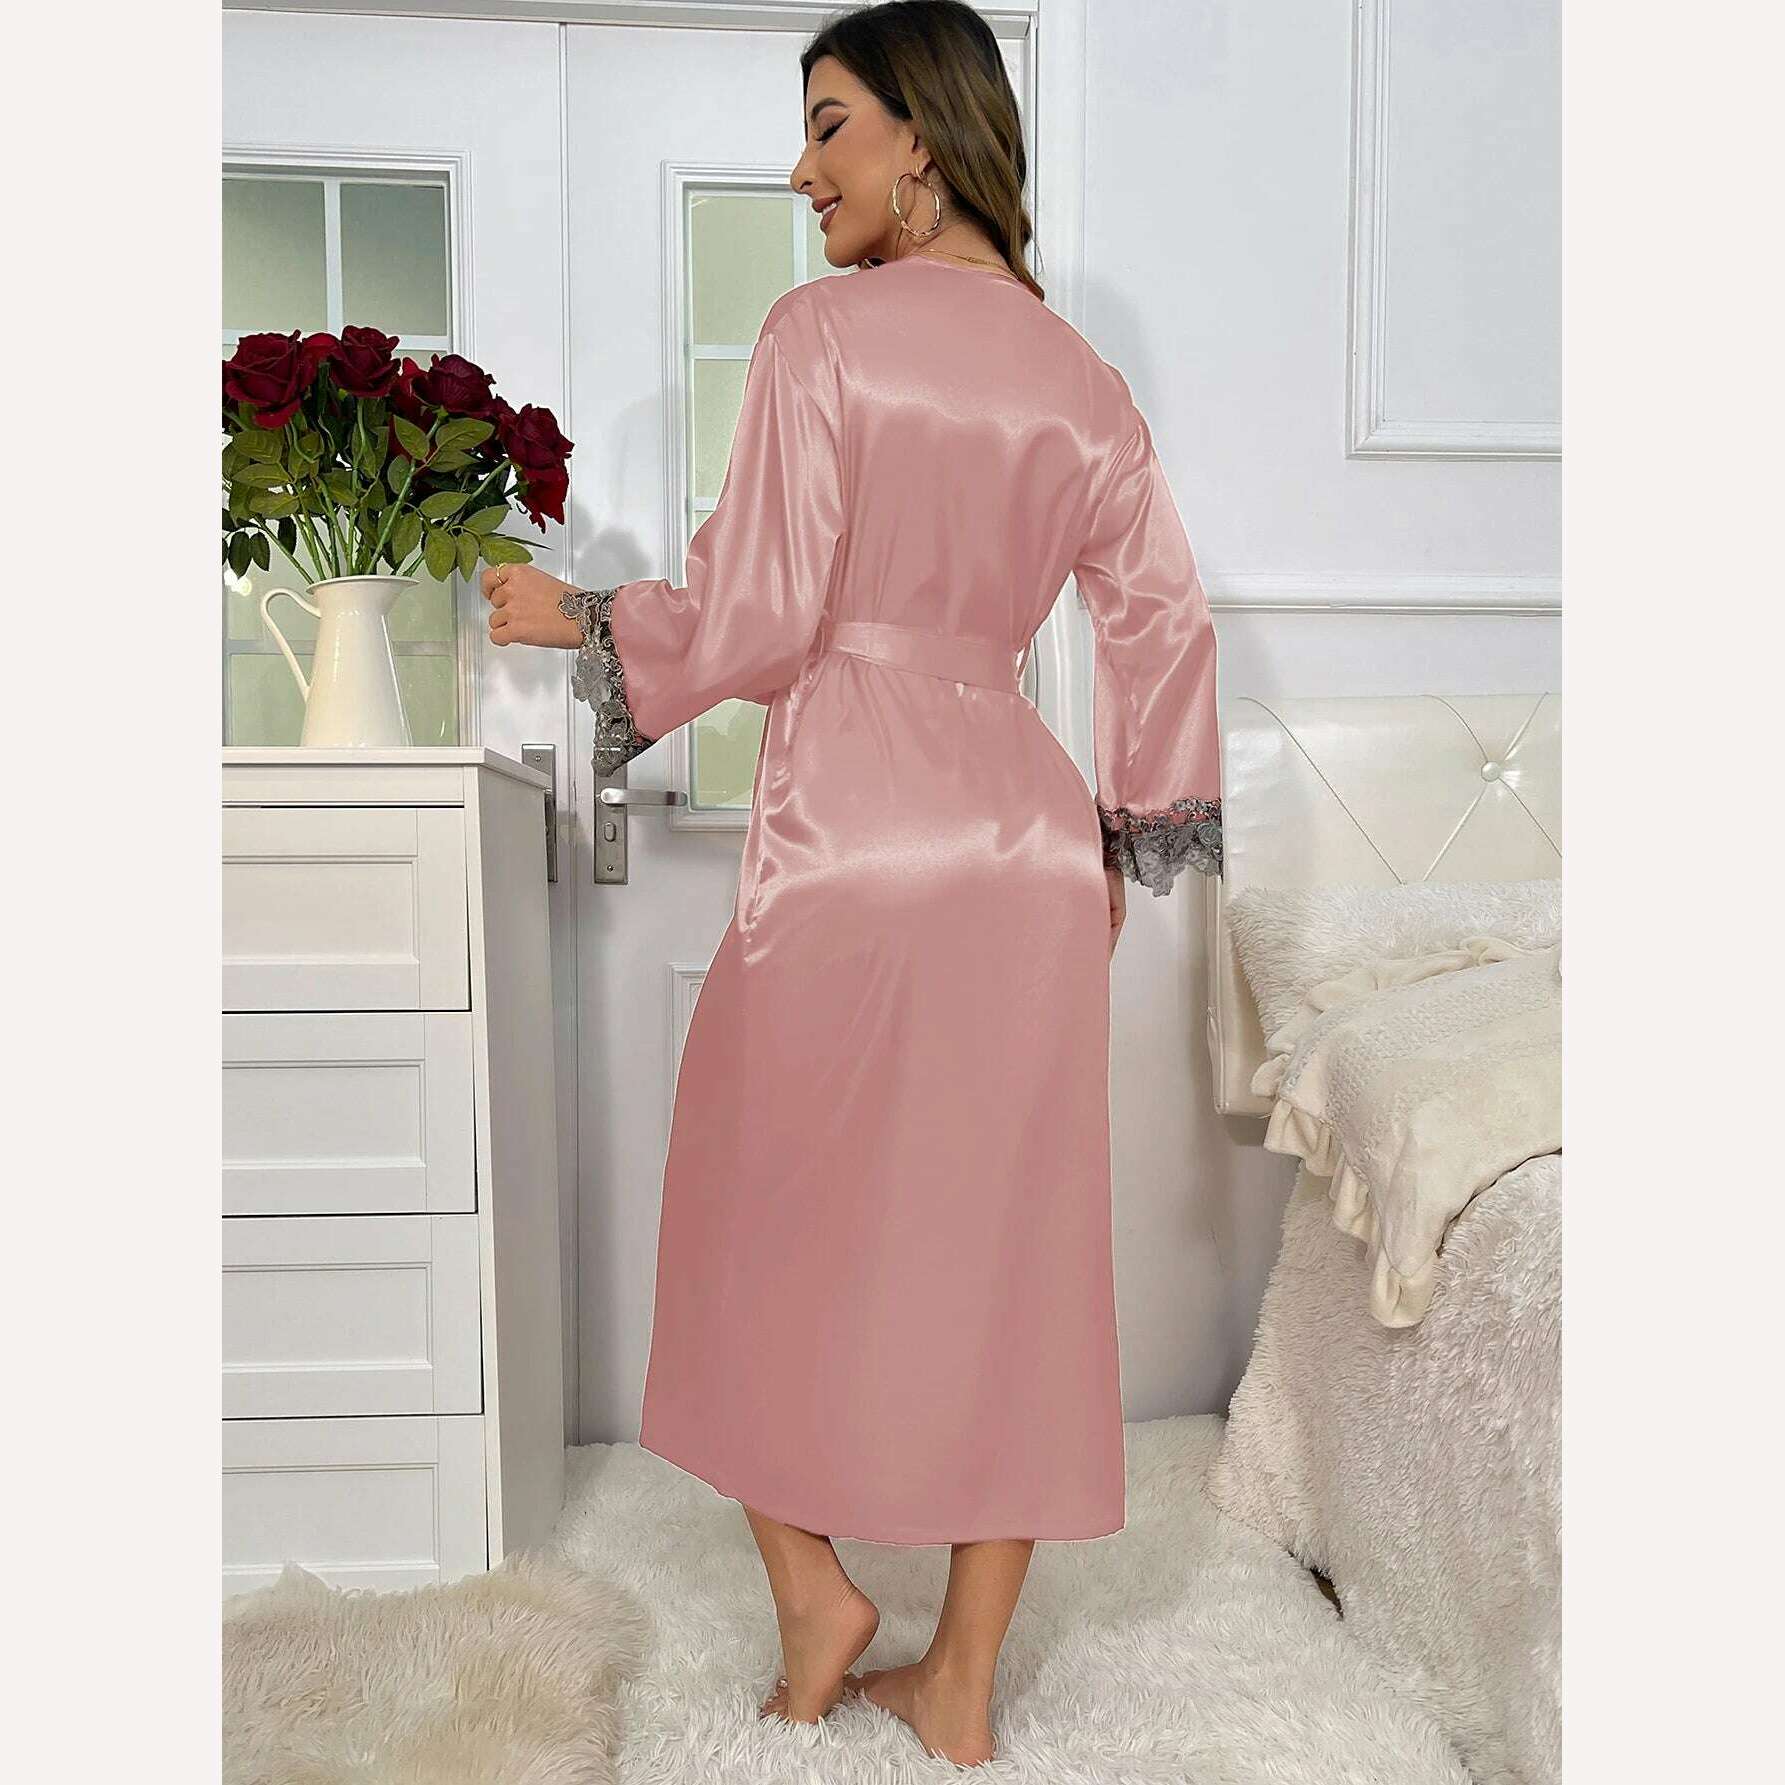 KIMLUD, 2cs Contrast Lace  Long Sleeve Belted Robe V Neck Slip Dress Sexy Elegant Women Pajamas  Sets, KIMLUD Women's Clothes